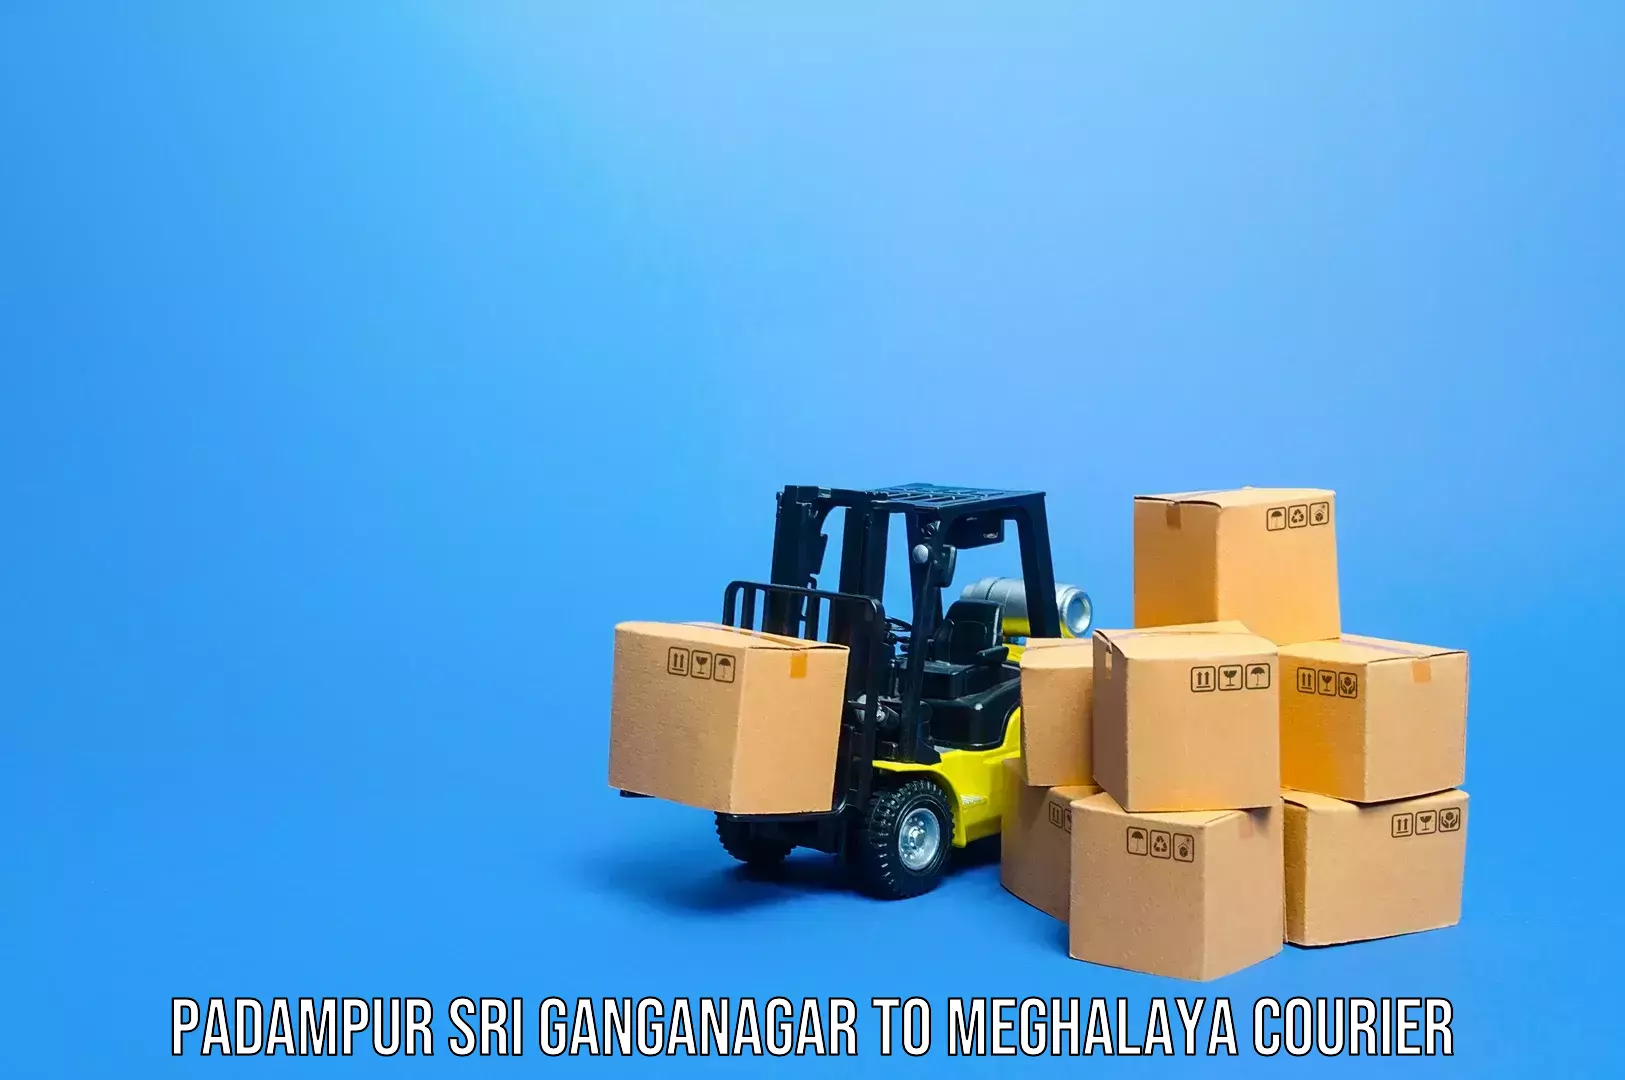 Luggage transport consultancy Padampur Sri Ganganagar to Jowai